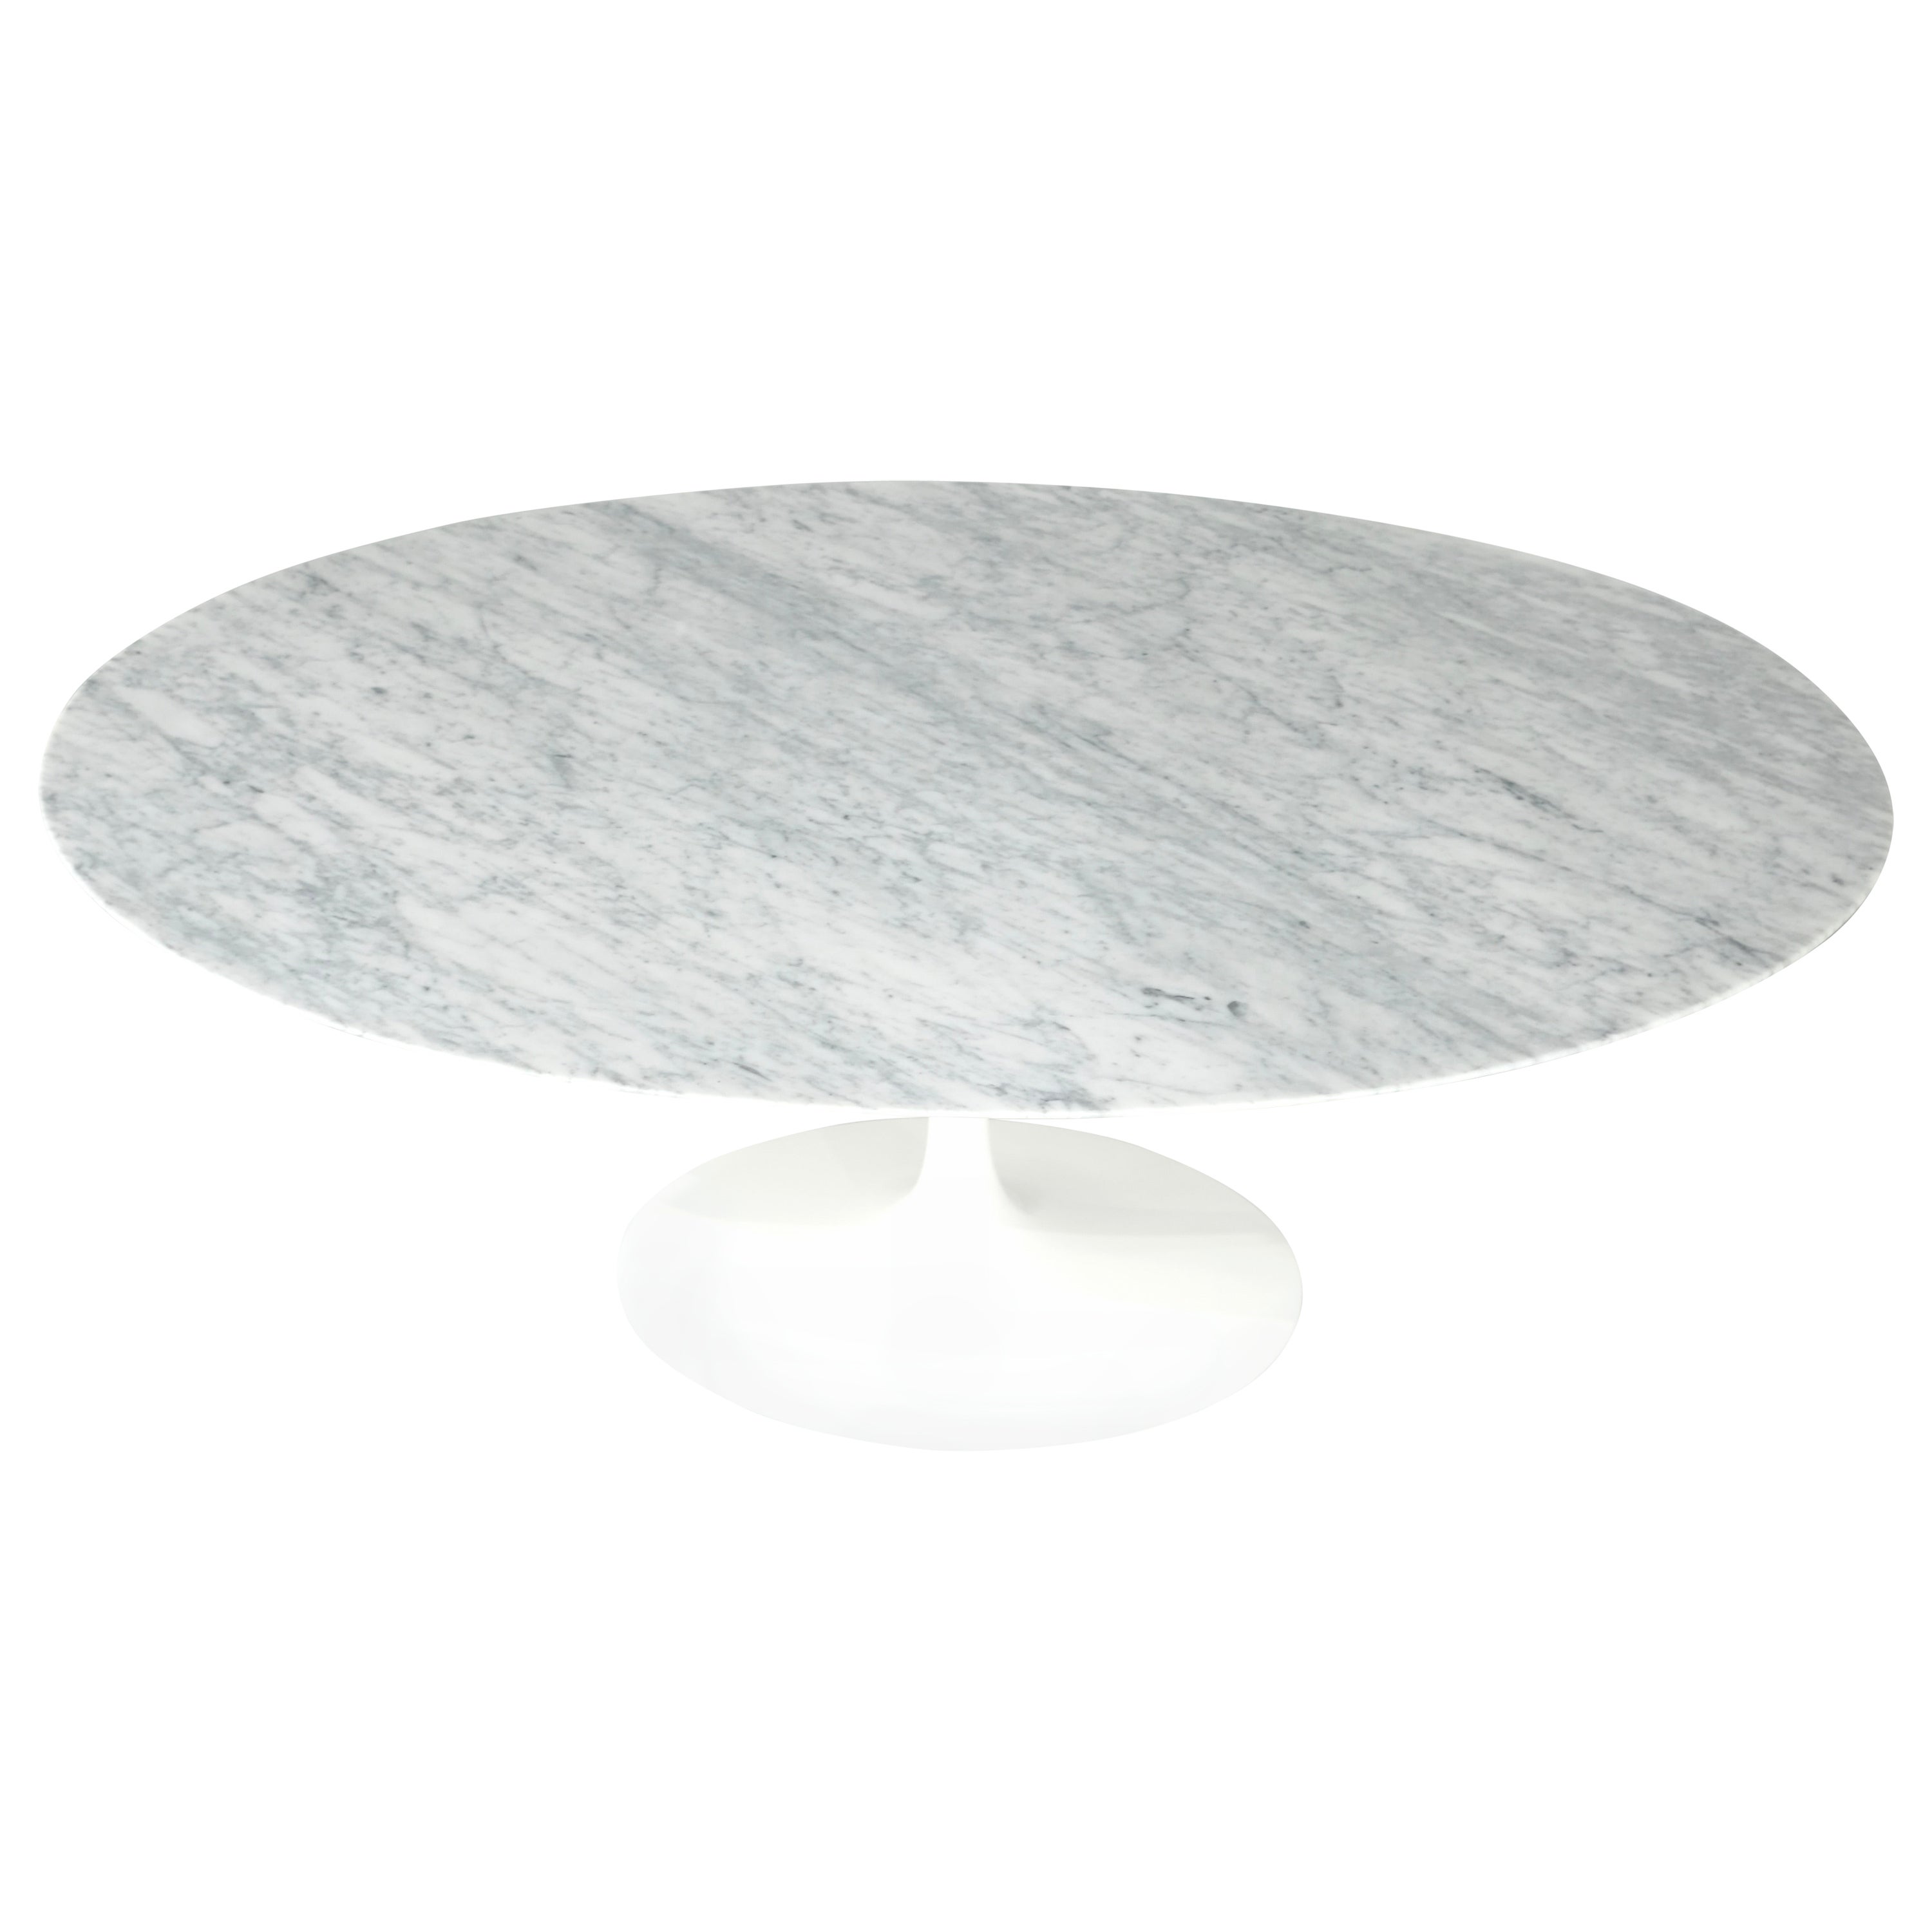 Table in Marble by Eero Saarinen for Knoll International, USA 1958.